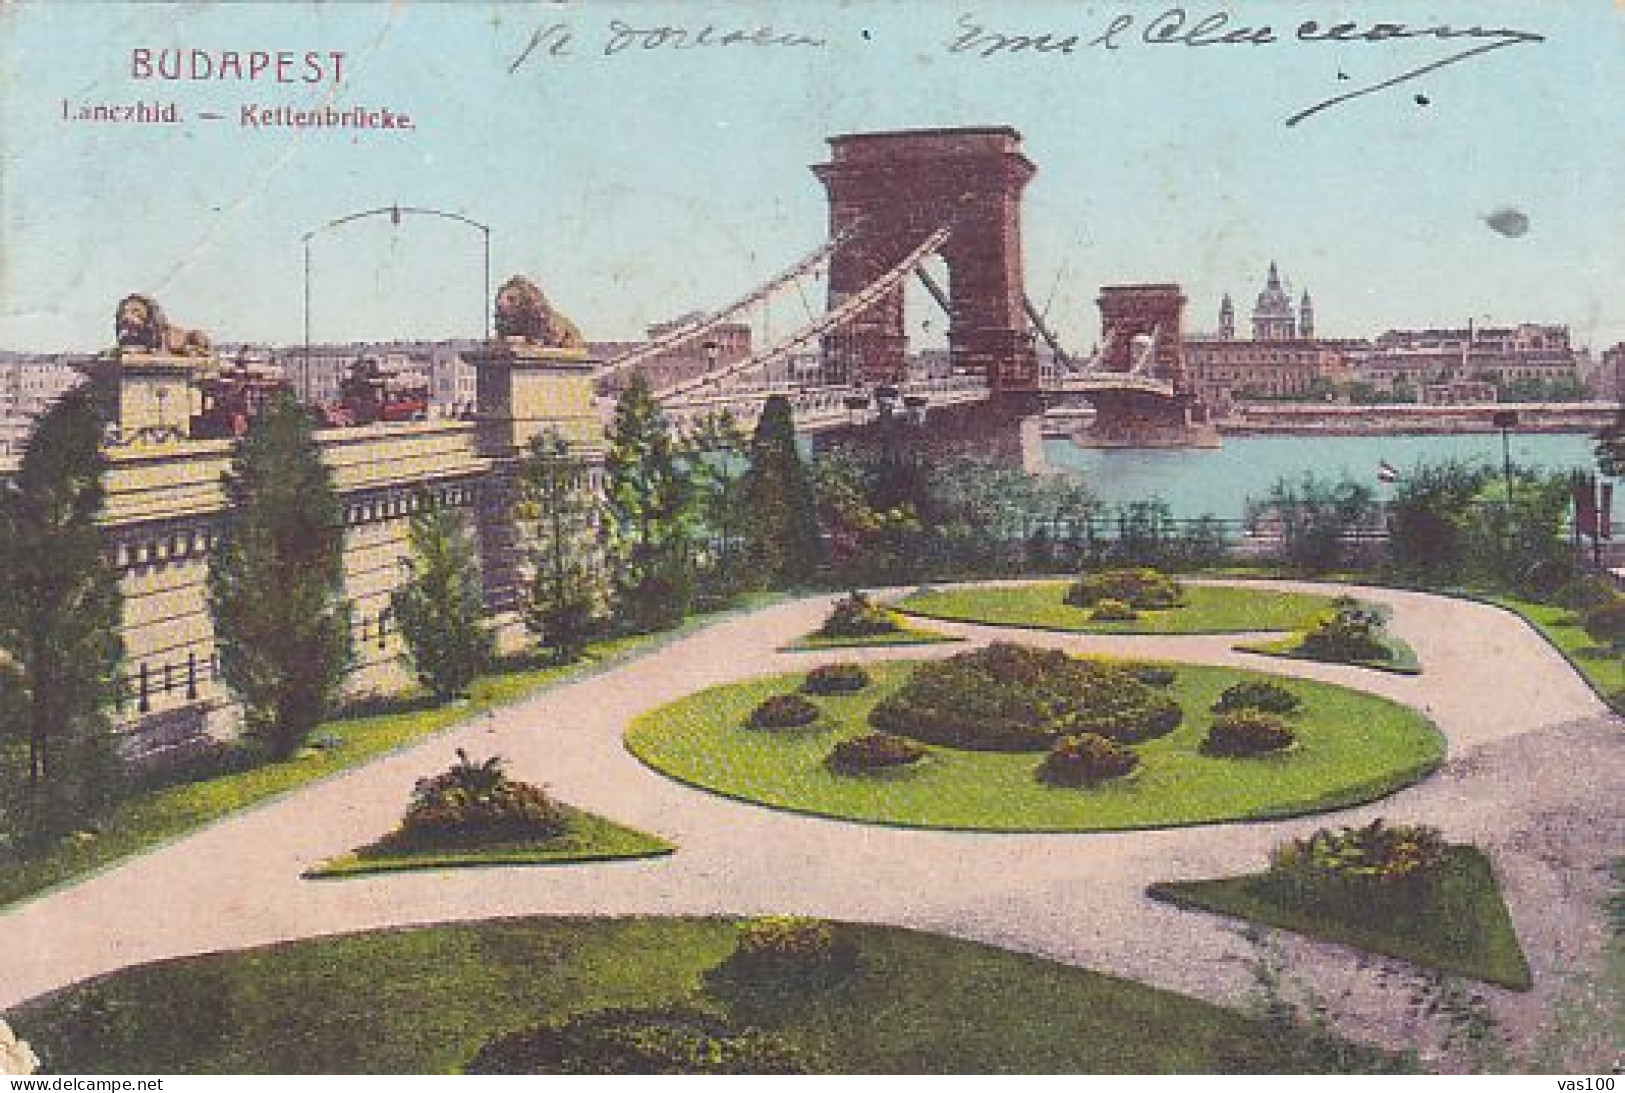 POSTAGE DUE, PORTO STAMPS ON BUDAPEST CHAIN BRIDGE POSTCARD, 1907, ROMANIA - Segnatasse